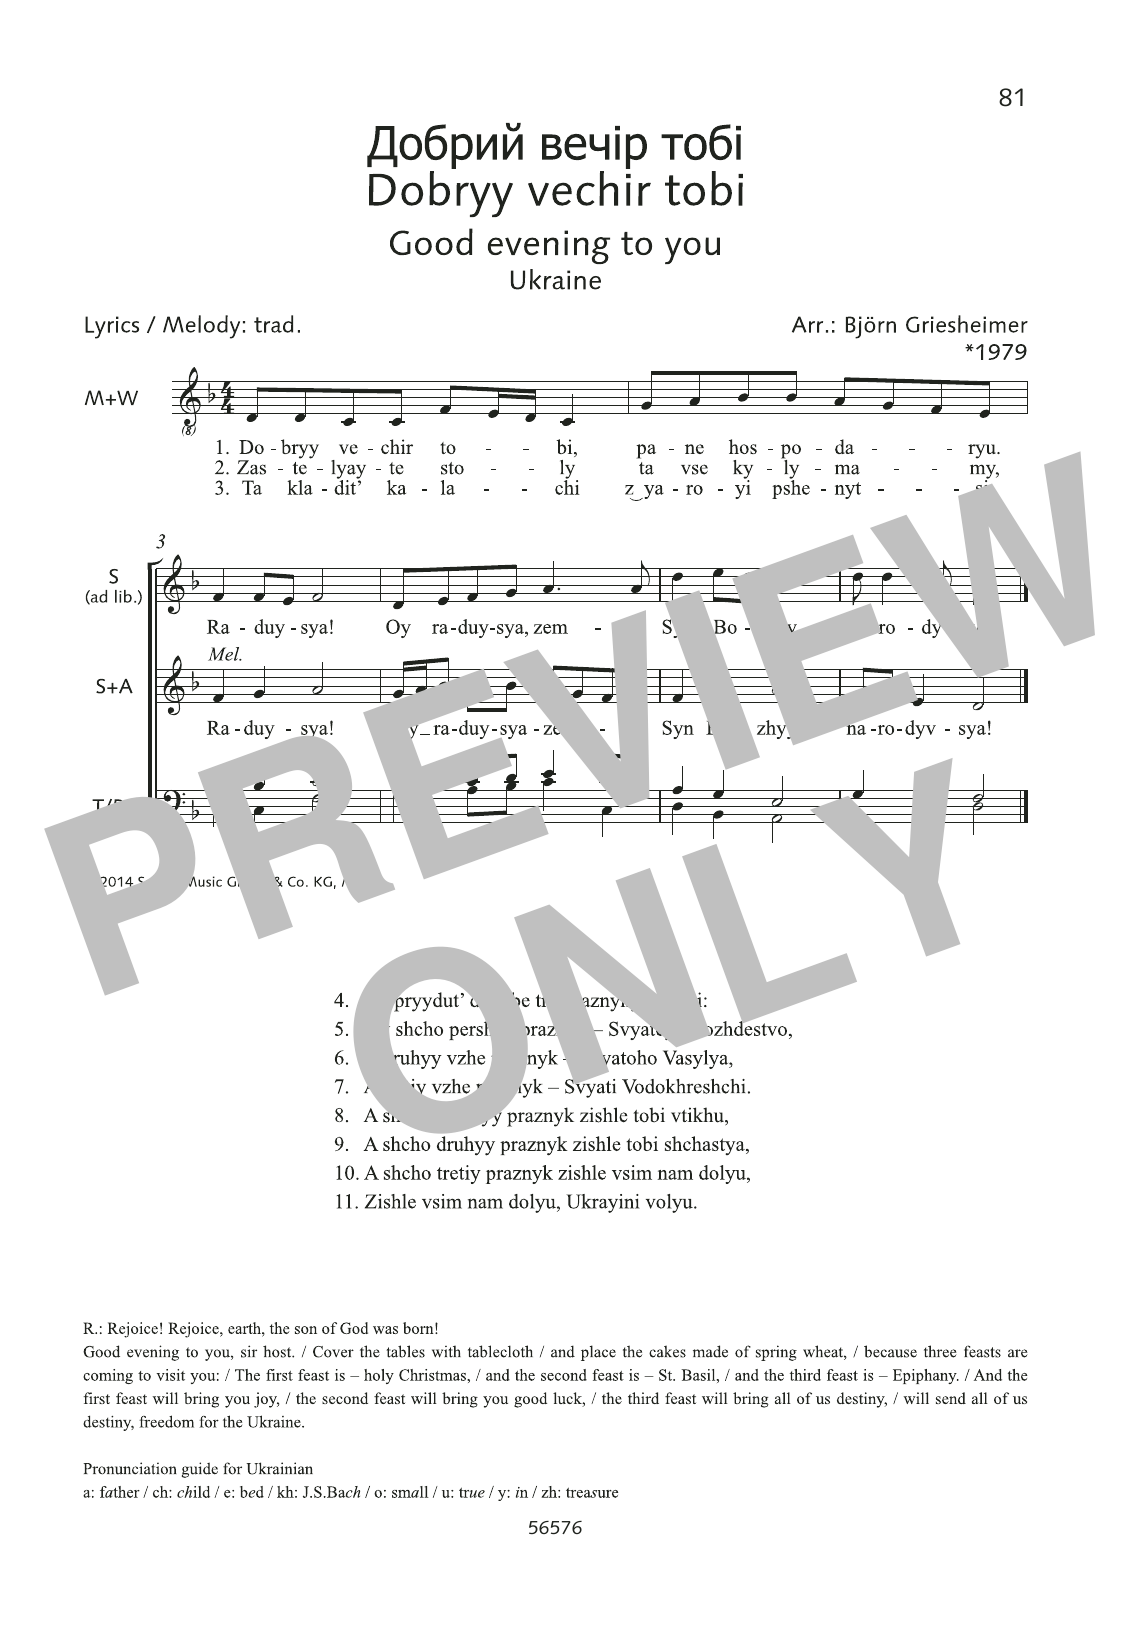 Björn Griesheimer Dobry vechir tobi Sheet Music Notes & Chords for Choral - Download or Print PDF